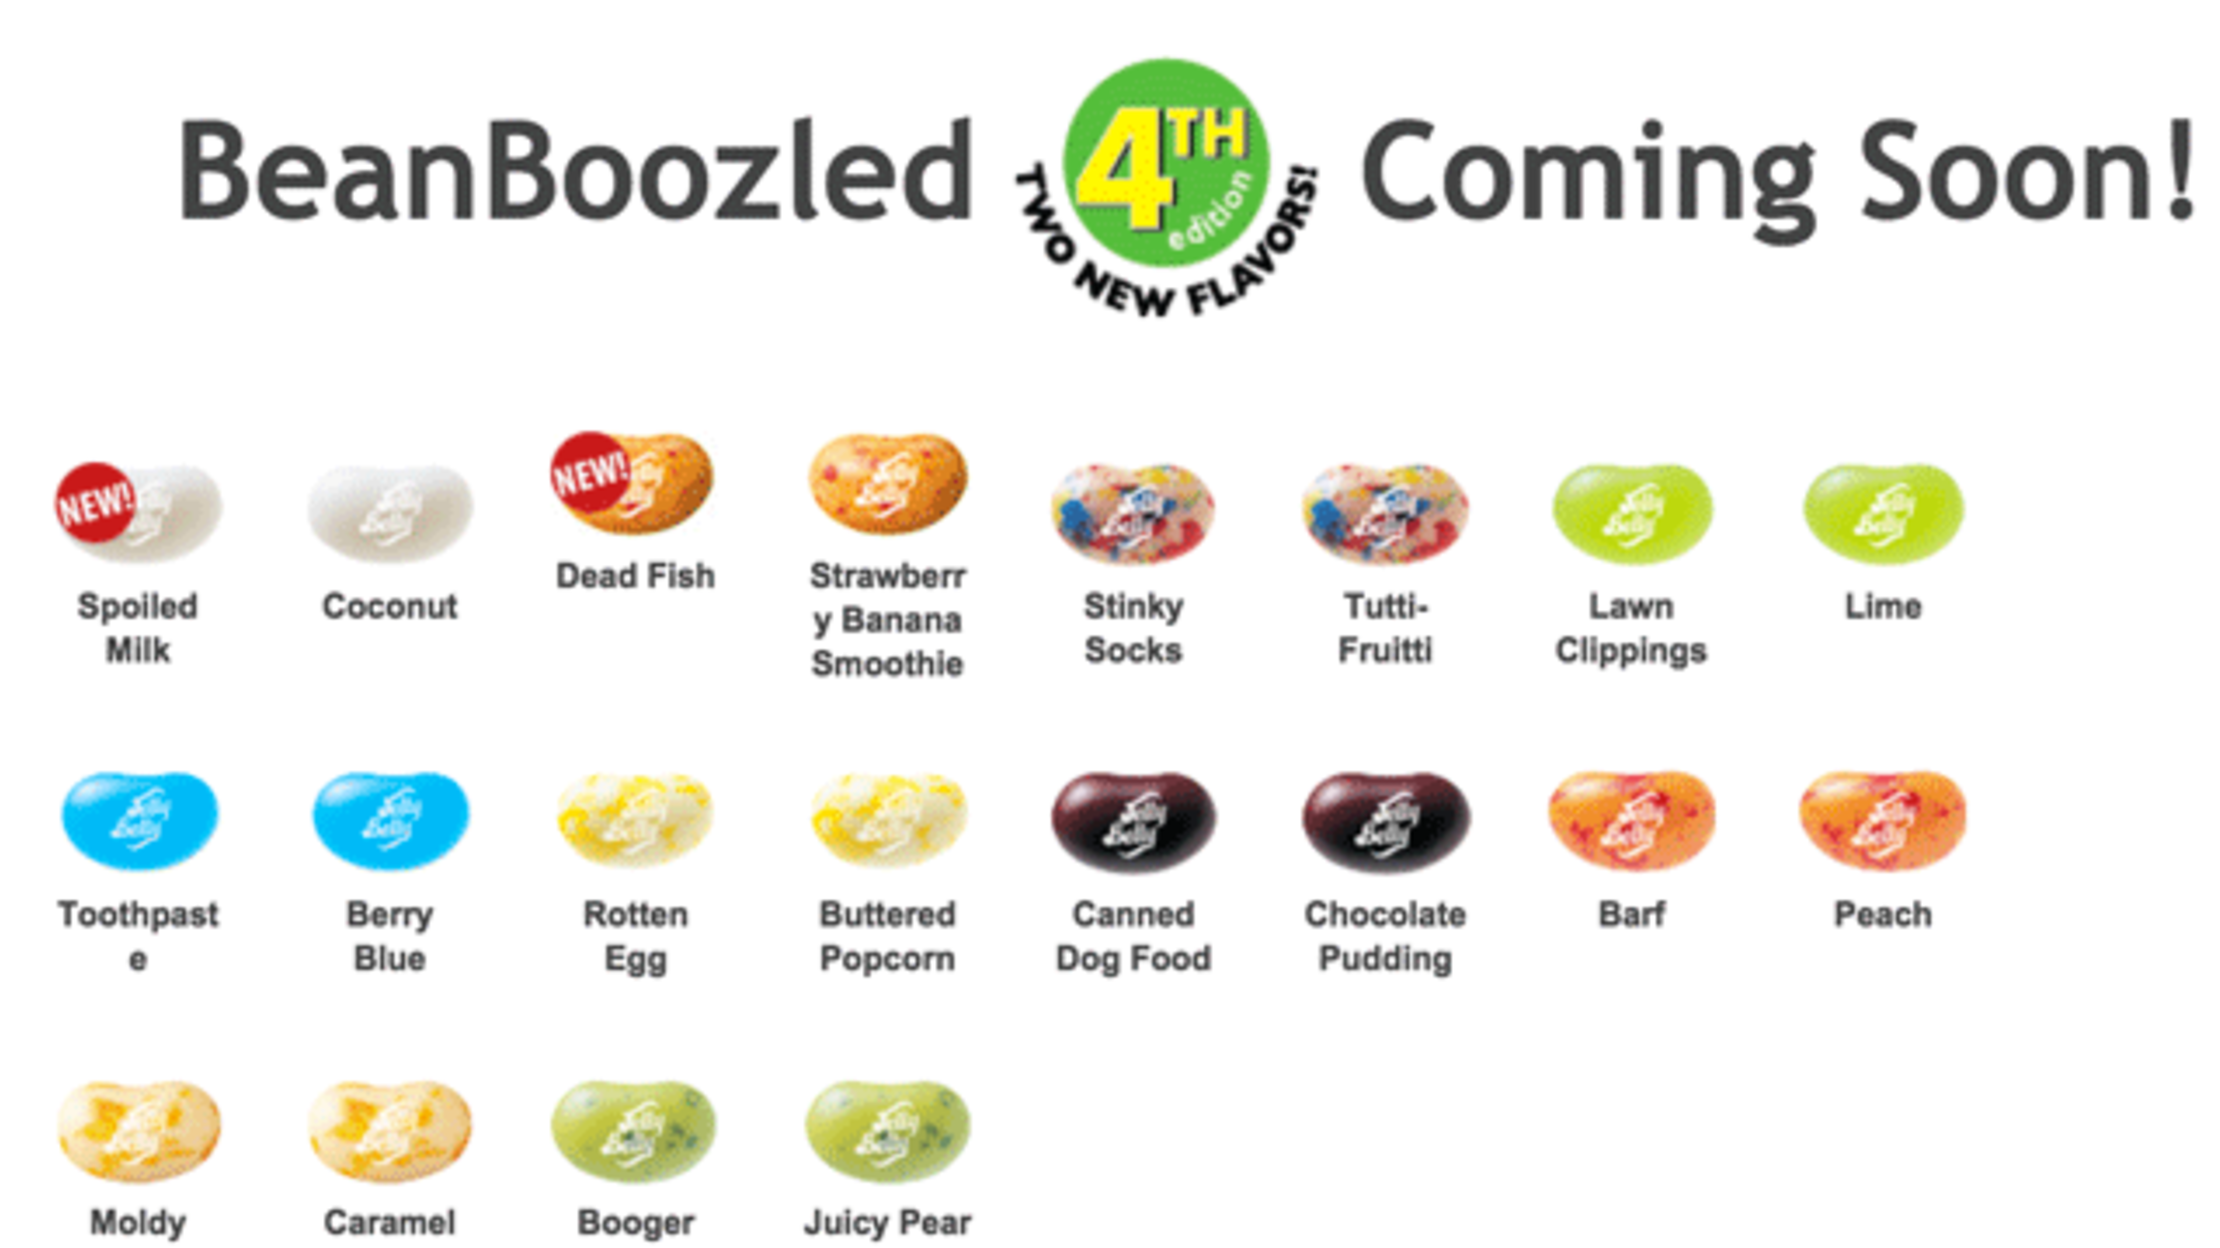 beanboozled flavors list - www.bruhm.com.